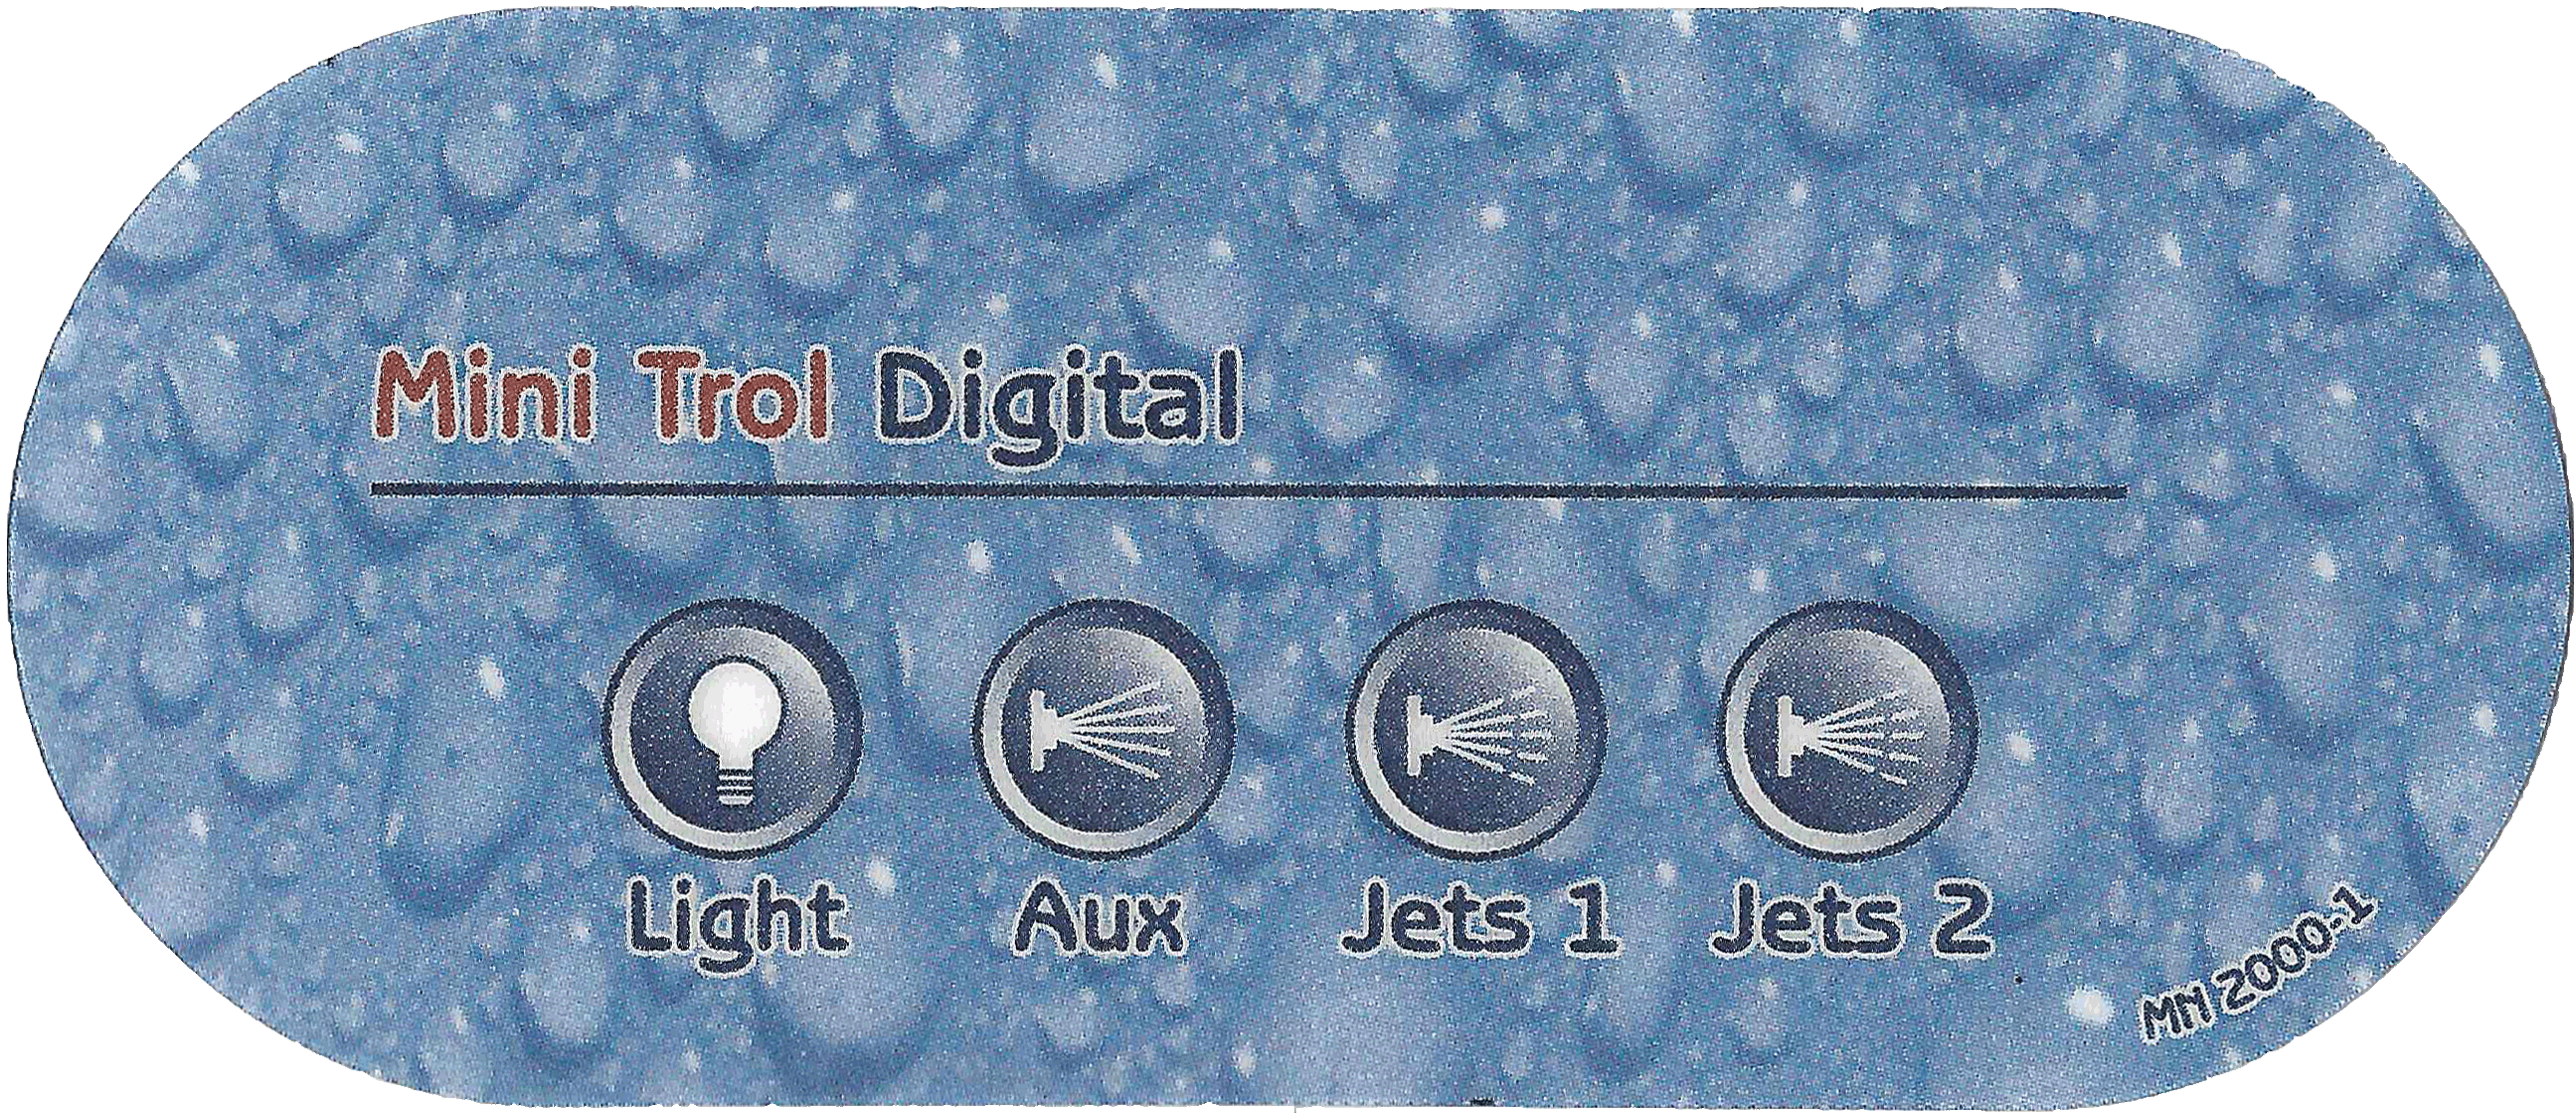 MN2000-1 Auxiliary Digital Spa Side Control